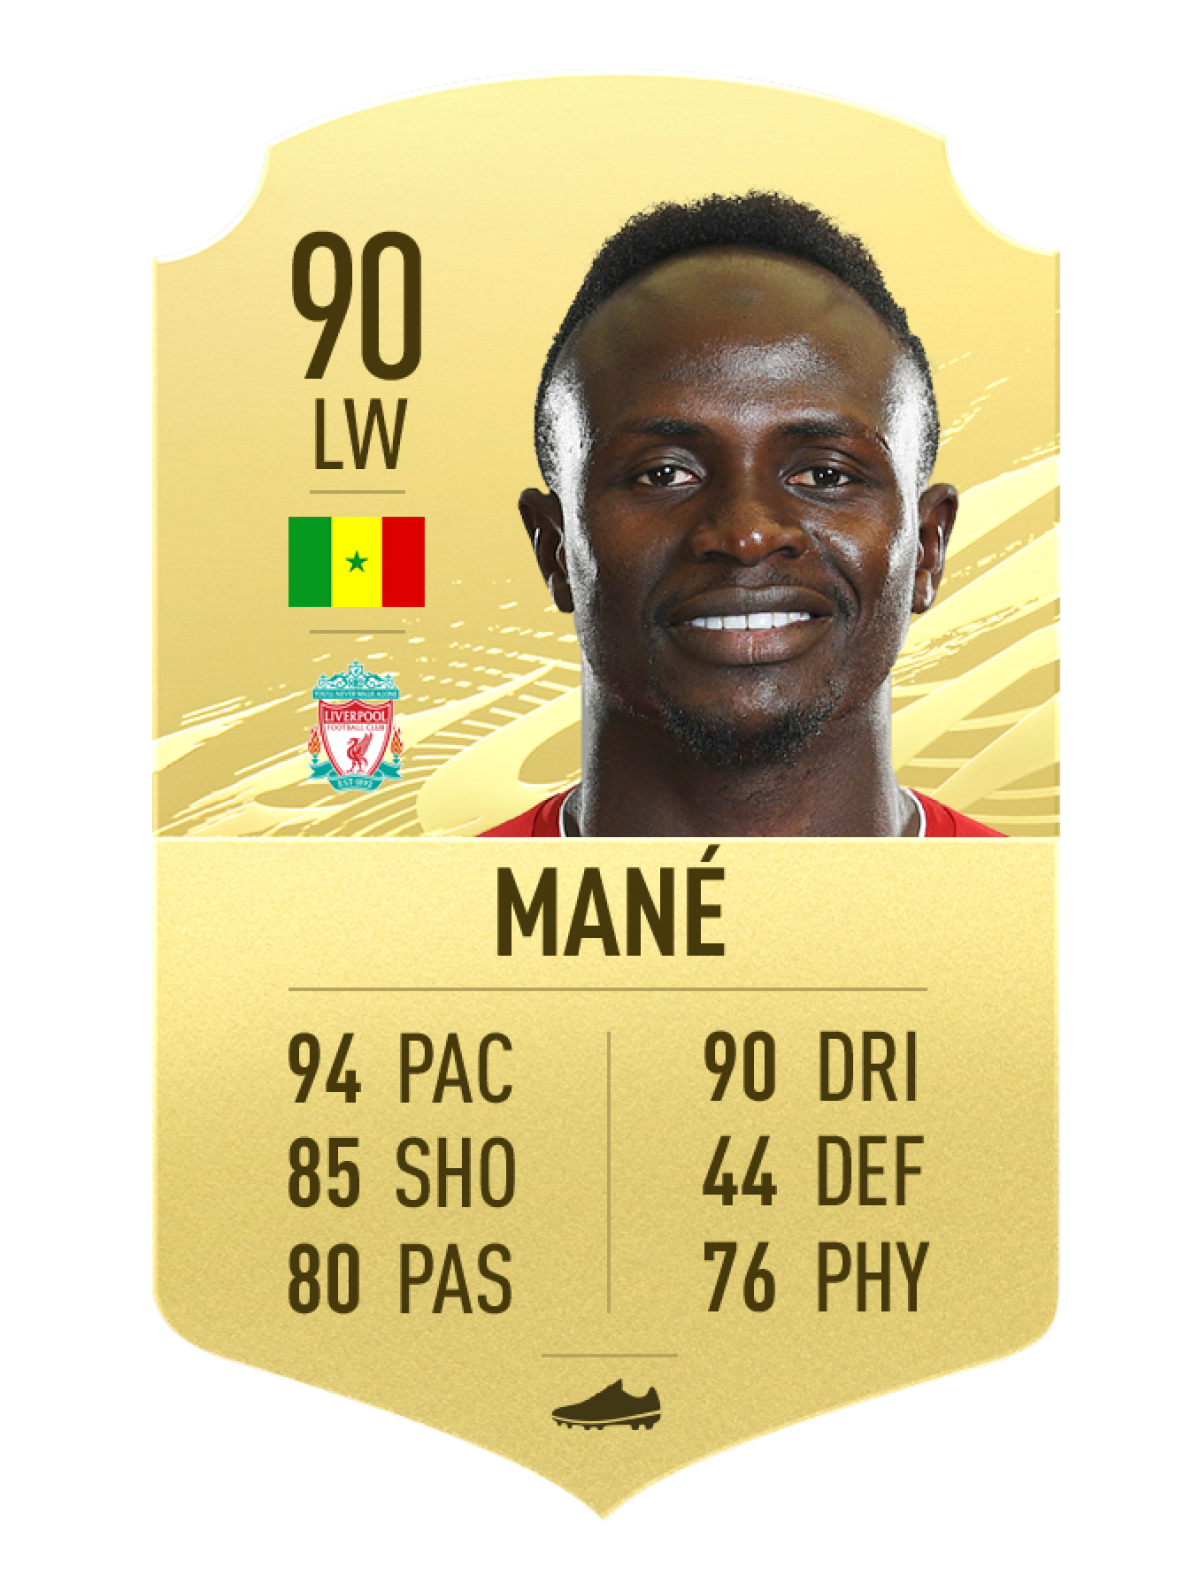 Mane (Senegal/Liverpool - Chỉ số chung 90)